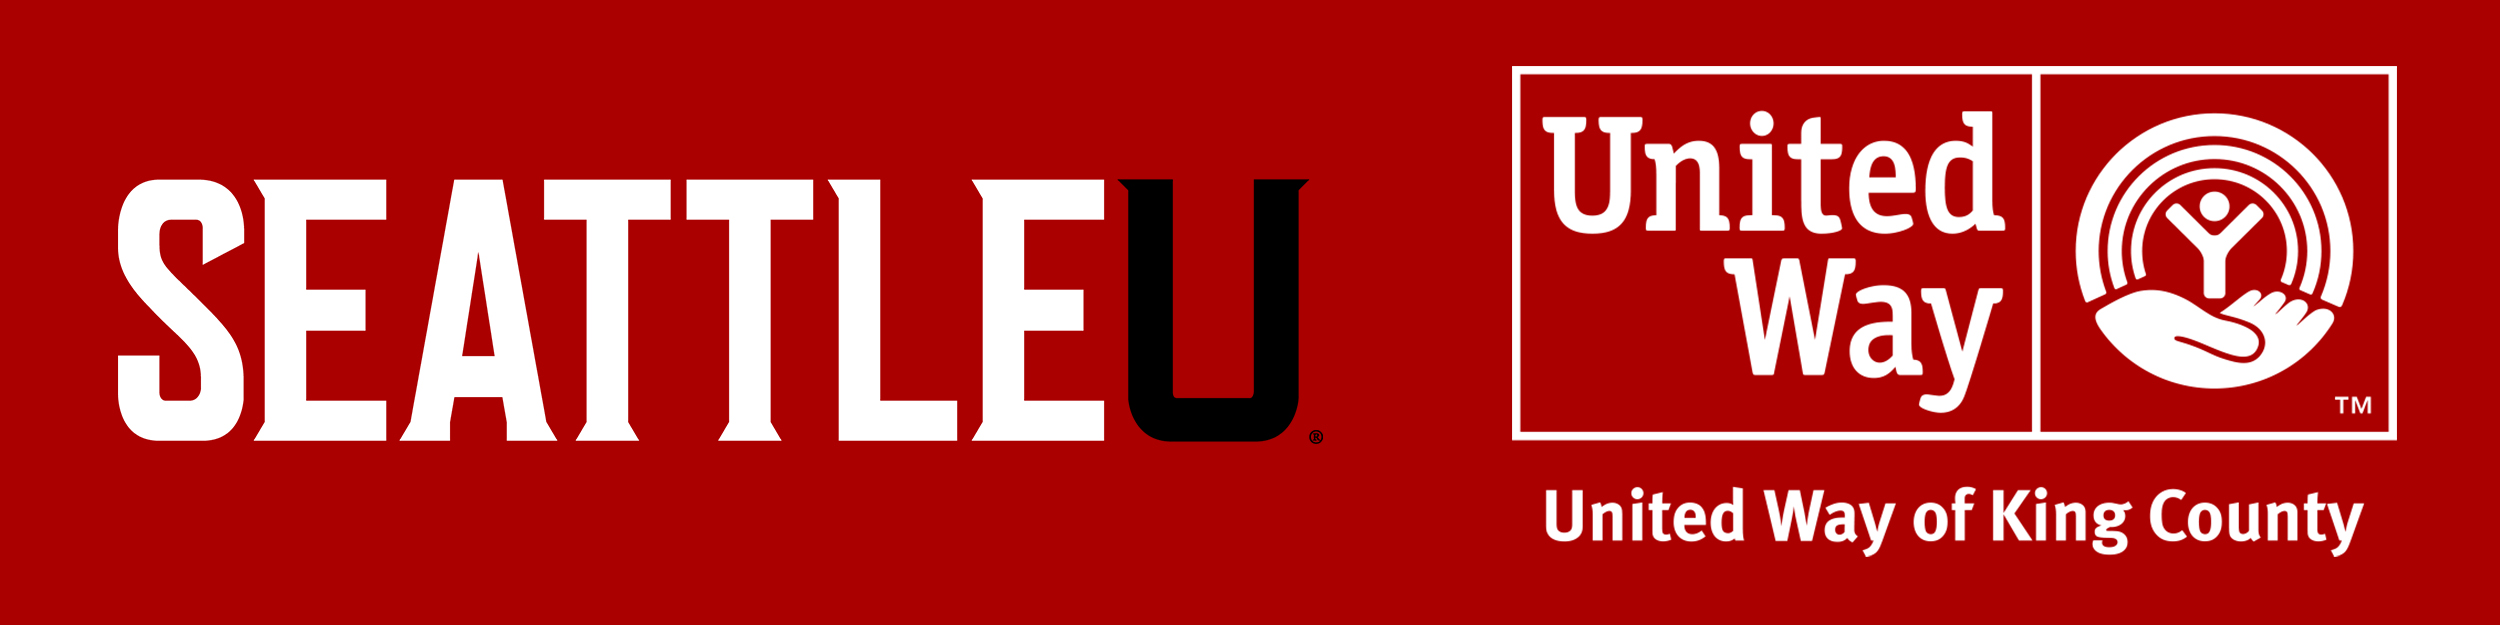 SU and UWKC logos